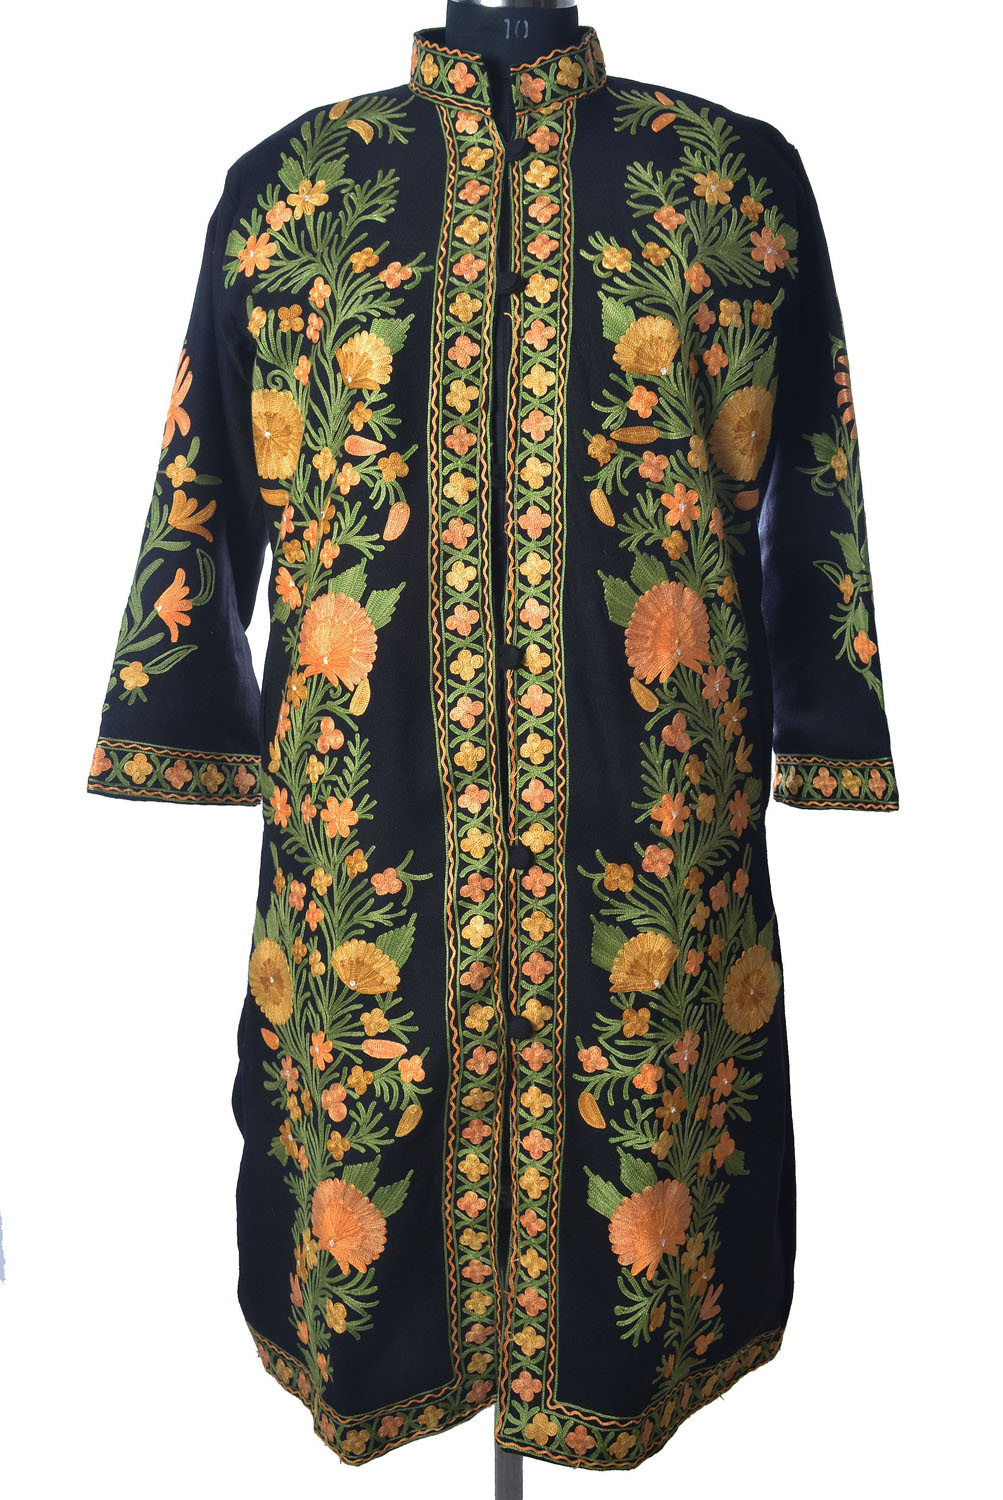 Embroidered Kashmiri Sherwani Long Jacket Coat - Pashmina Golden